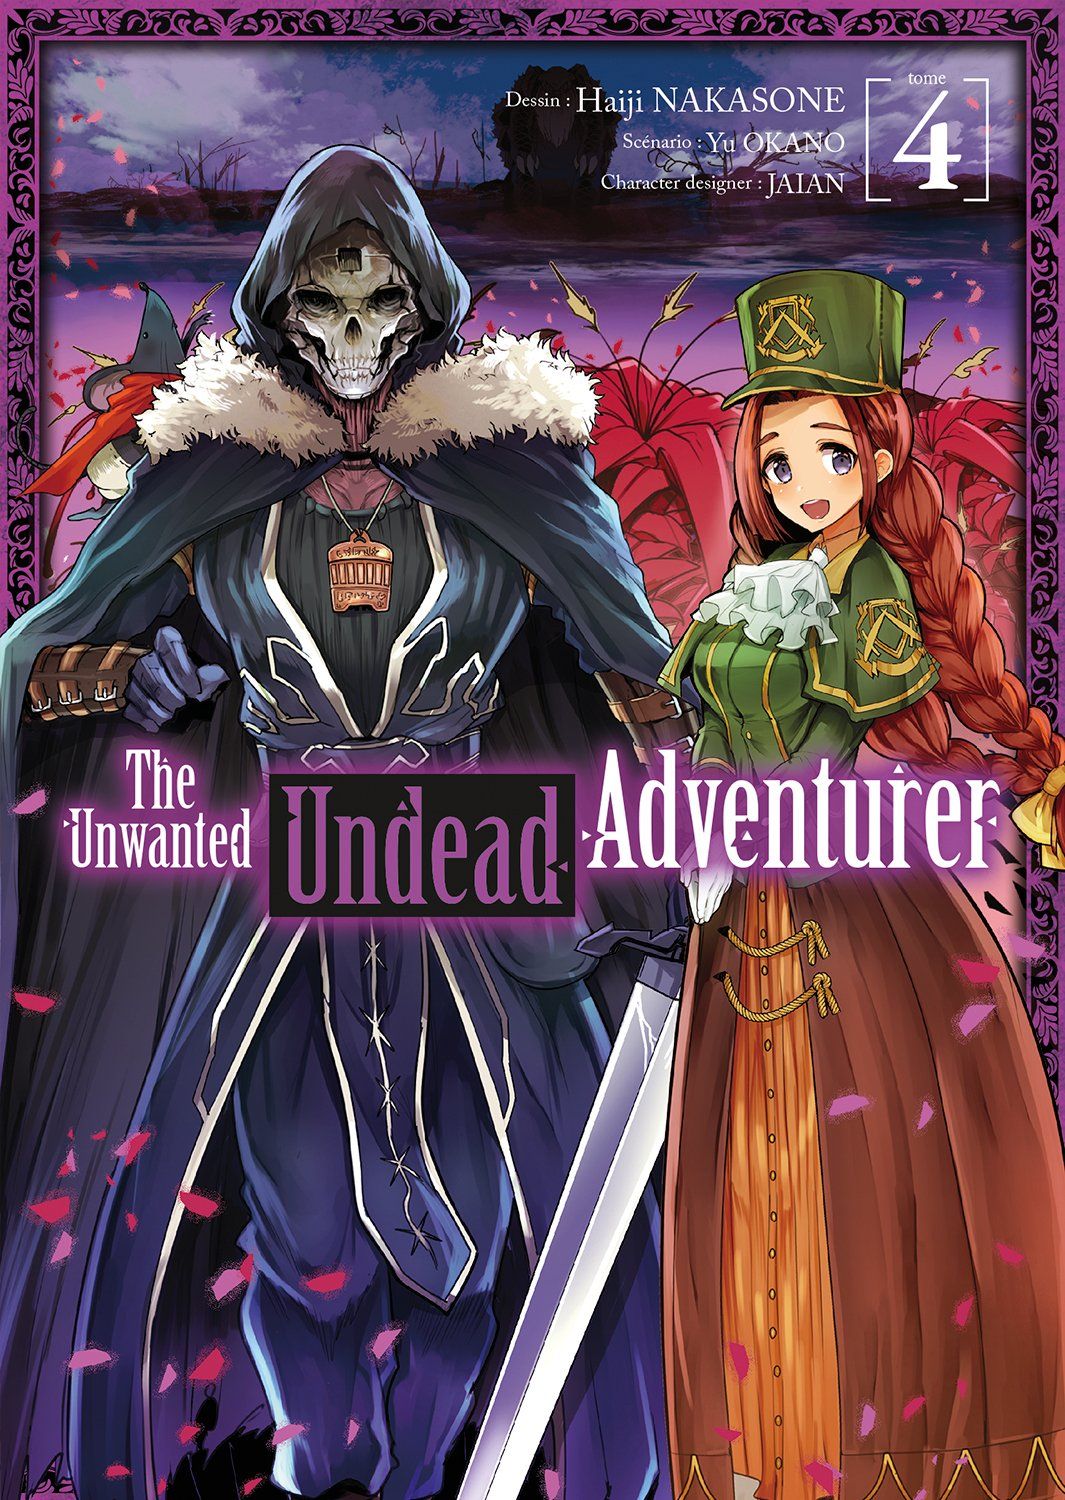 The Unwanted Undead Adventurer Vol.4